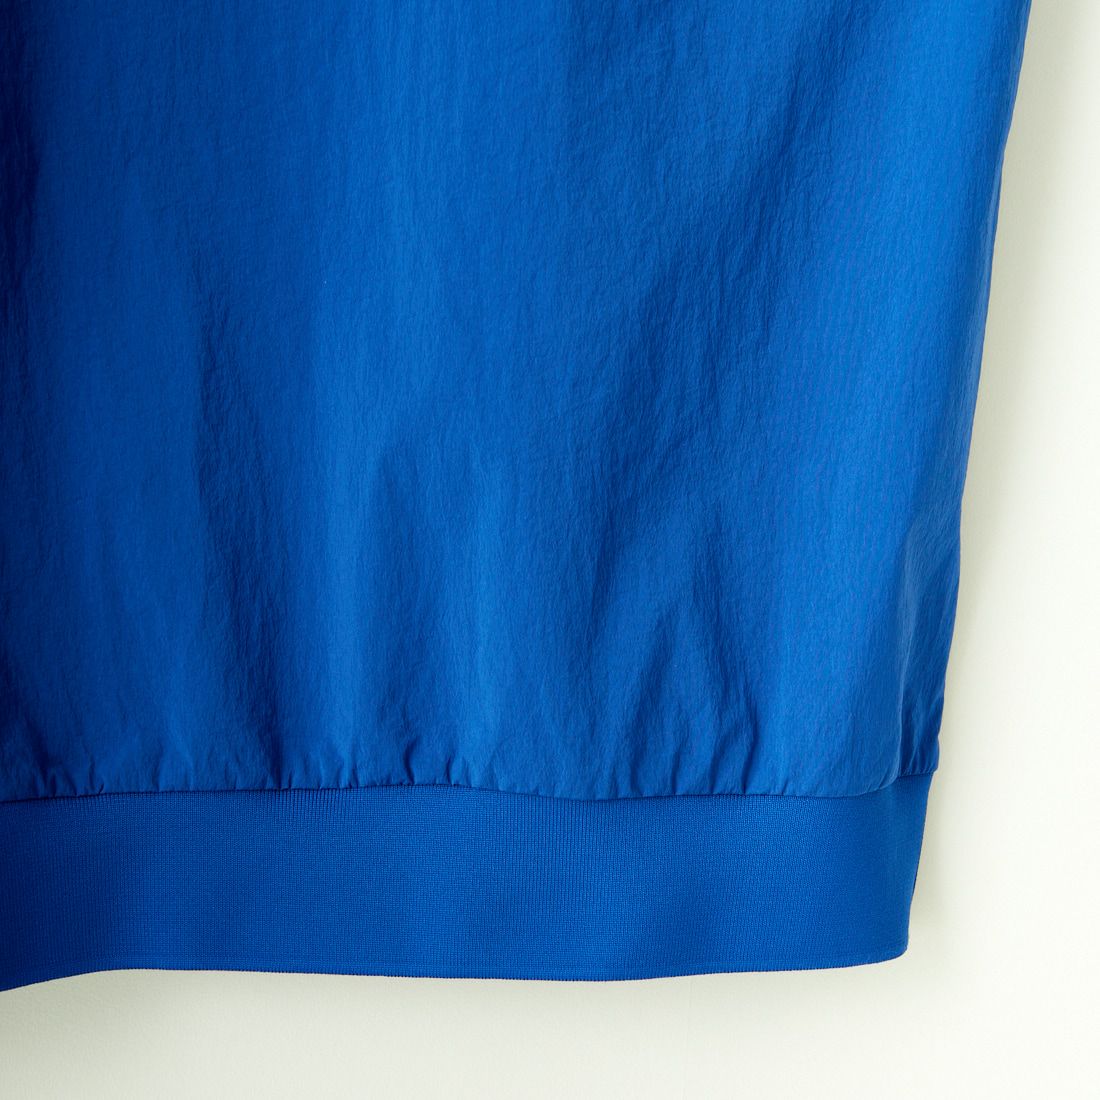 A.P.C. GOLF [アー・ペー・セー ゴルフ] ADRIEN Tシャツ [CTM4411] BLUE